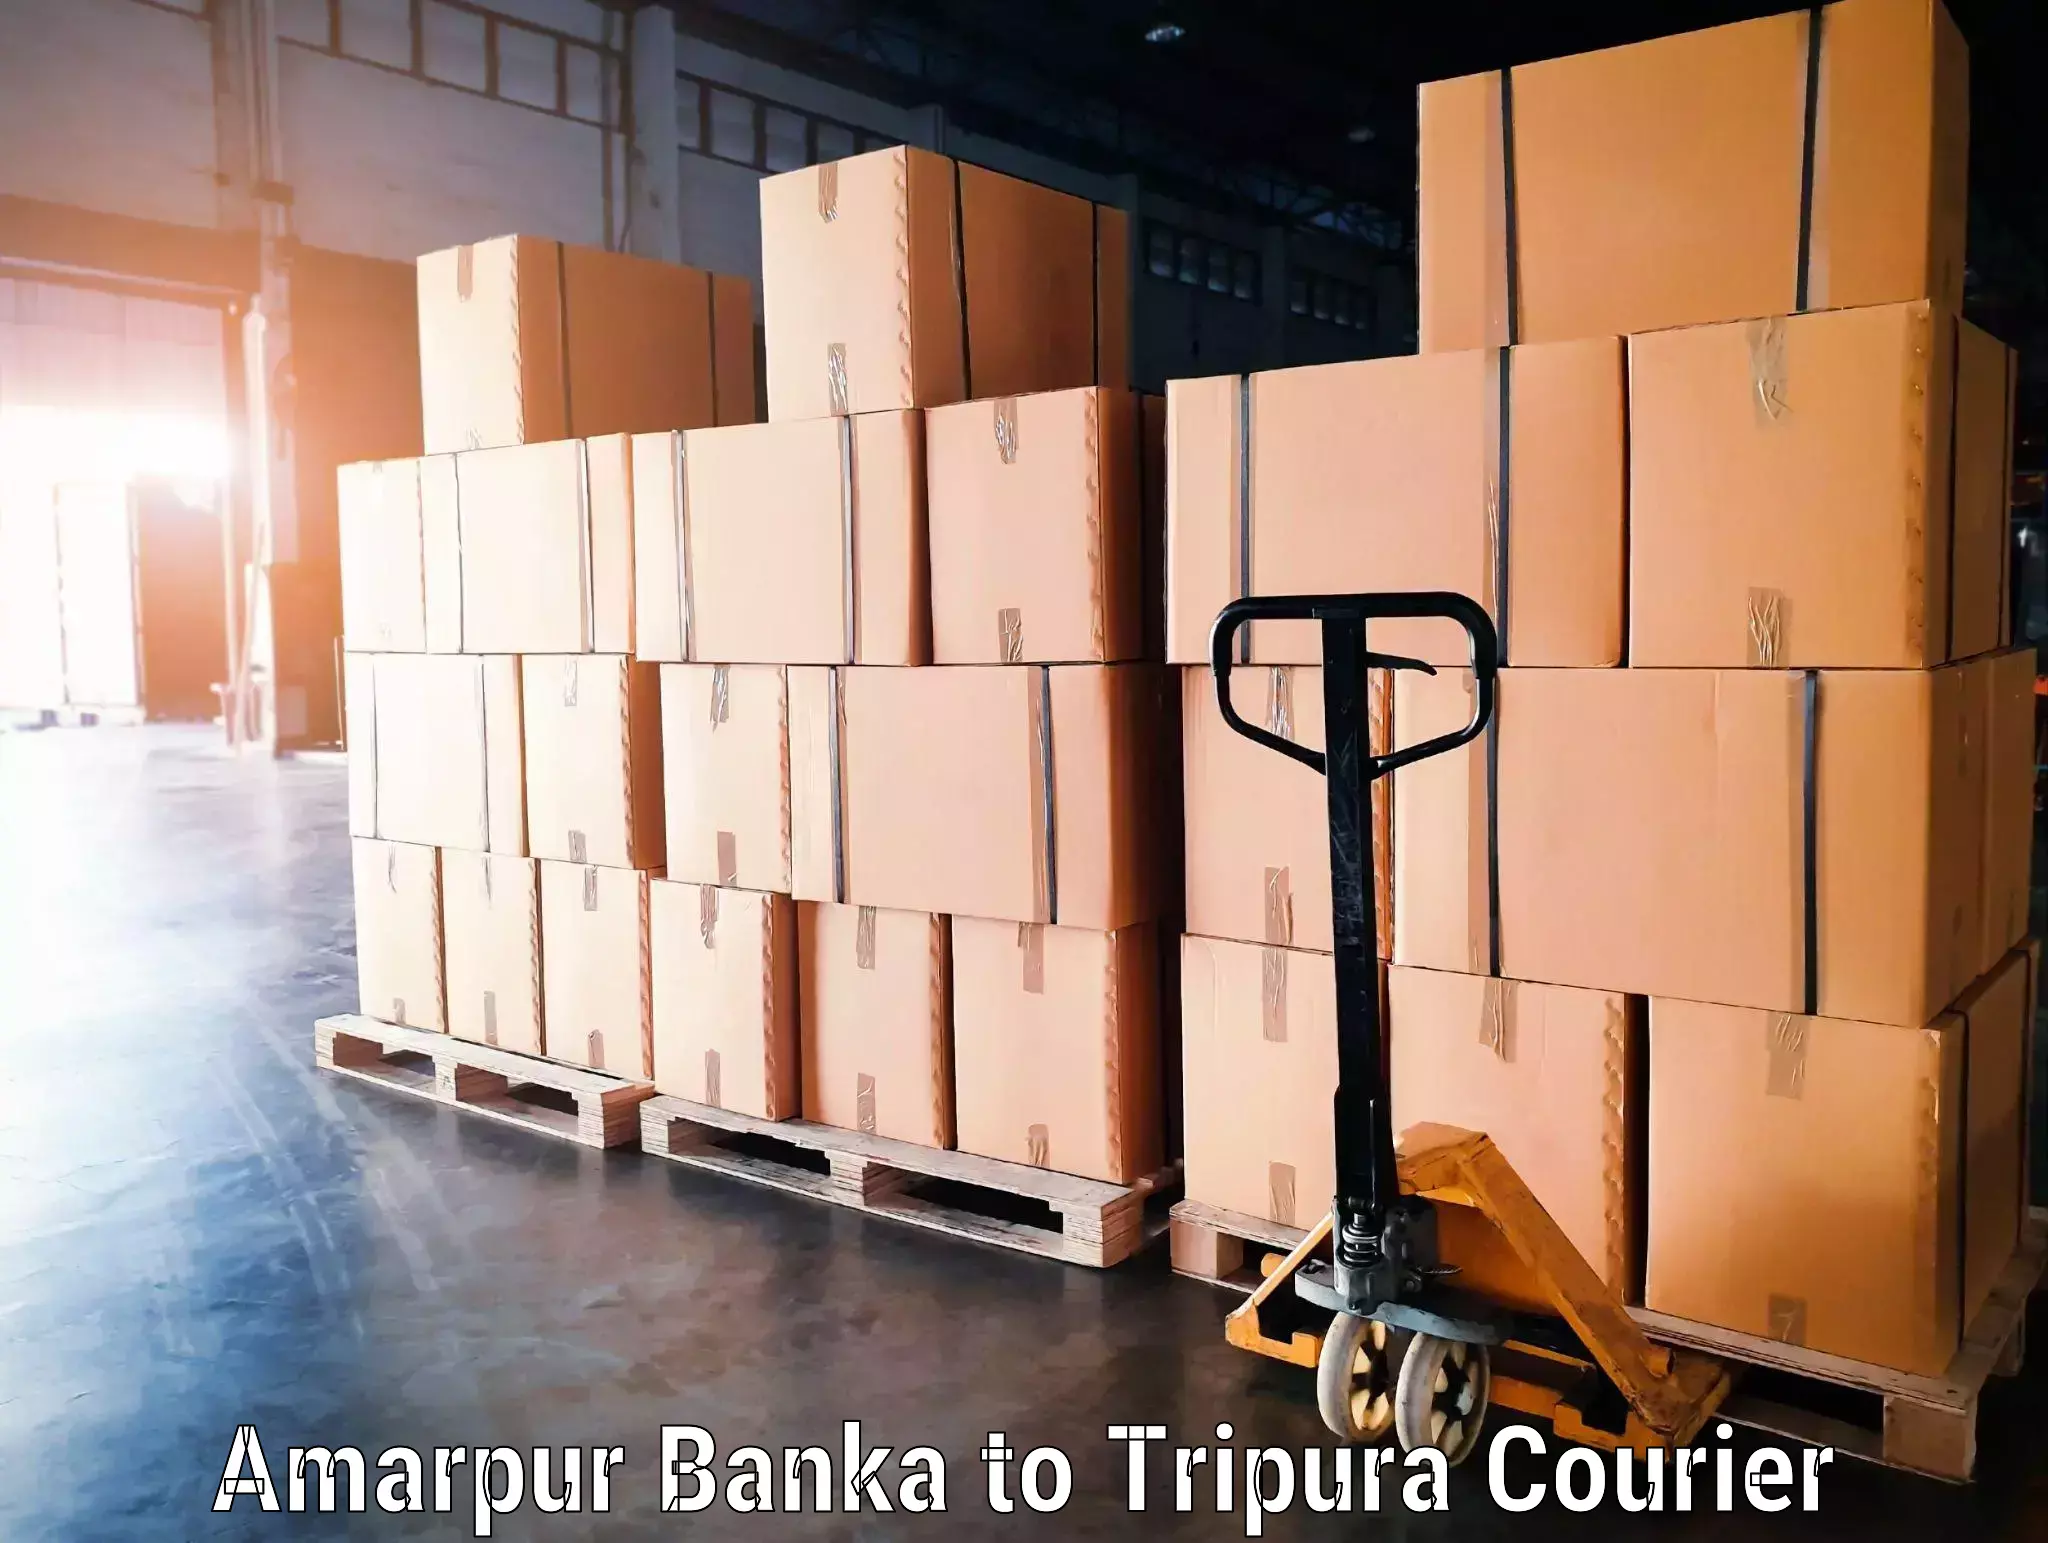 Baggage relocation service Amarpur Banka to Manughat